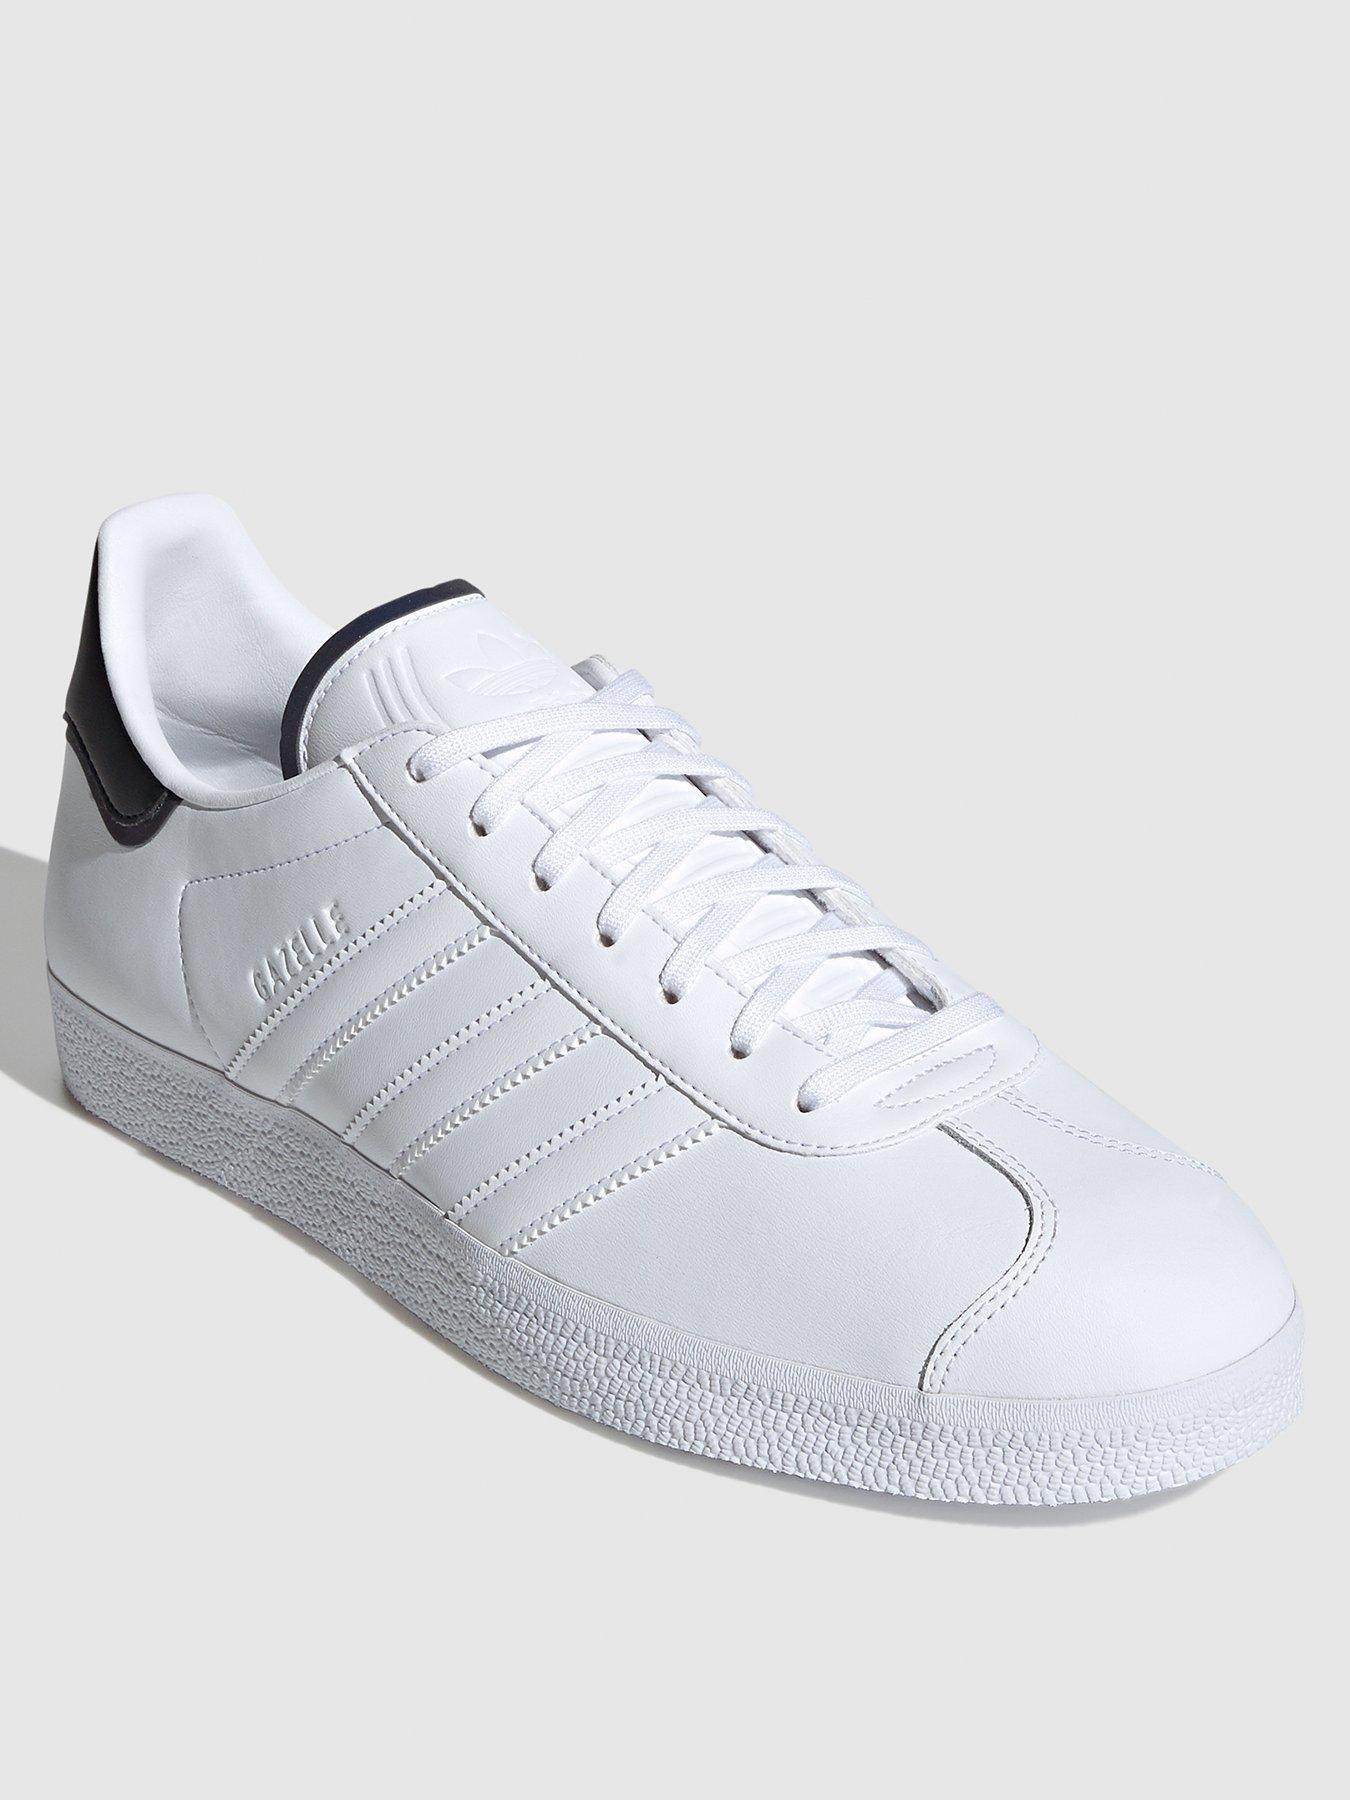 mens white adidas originals trainers